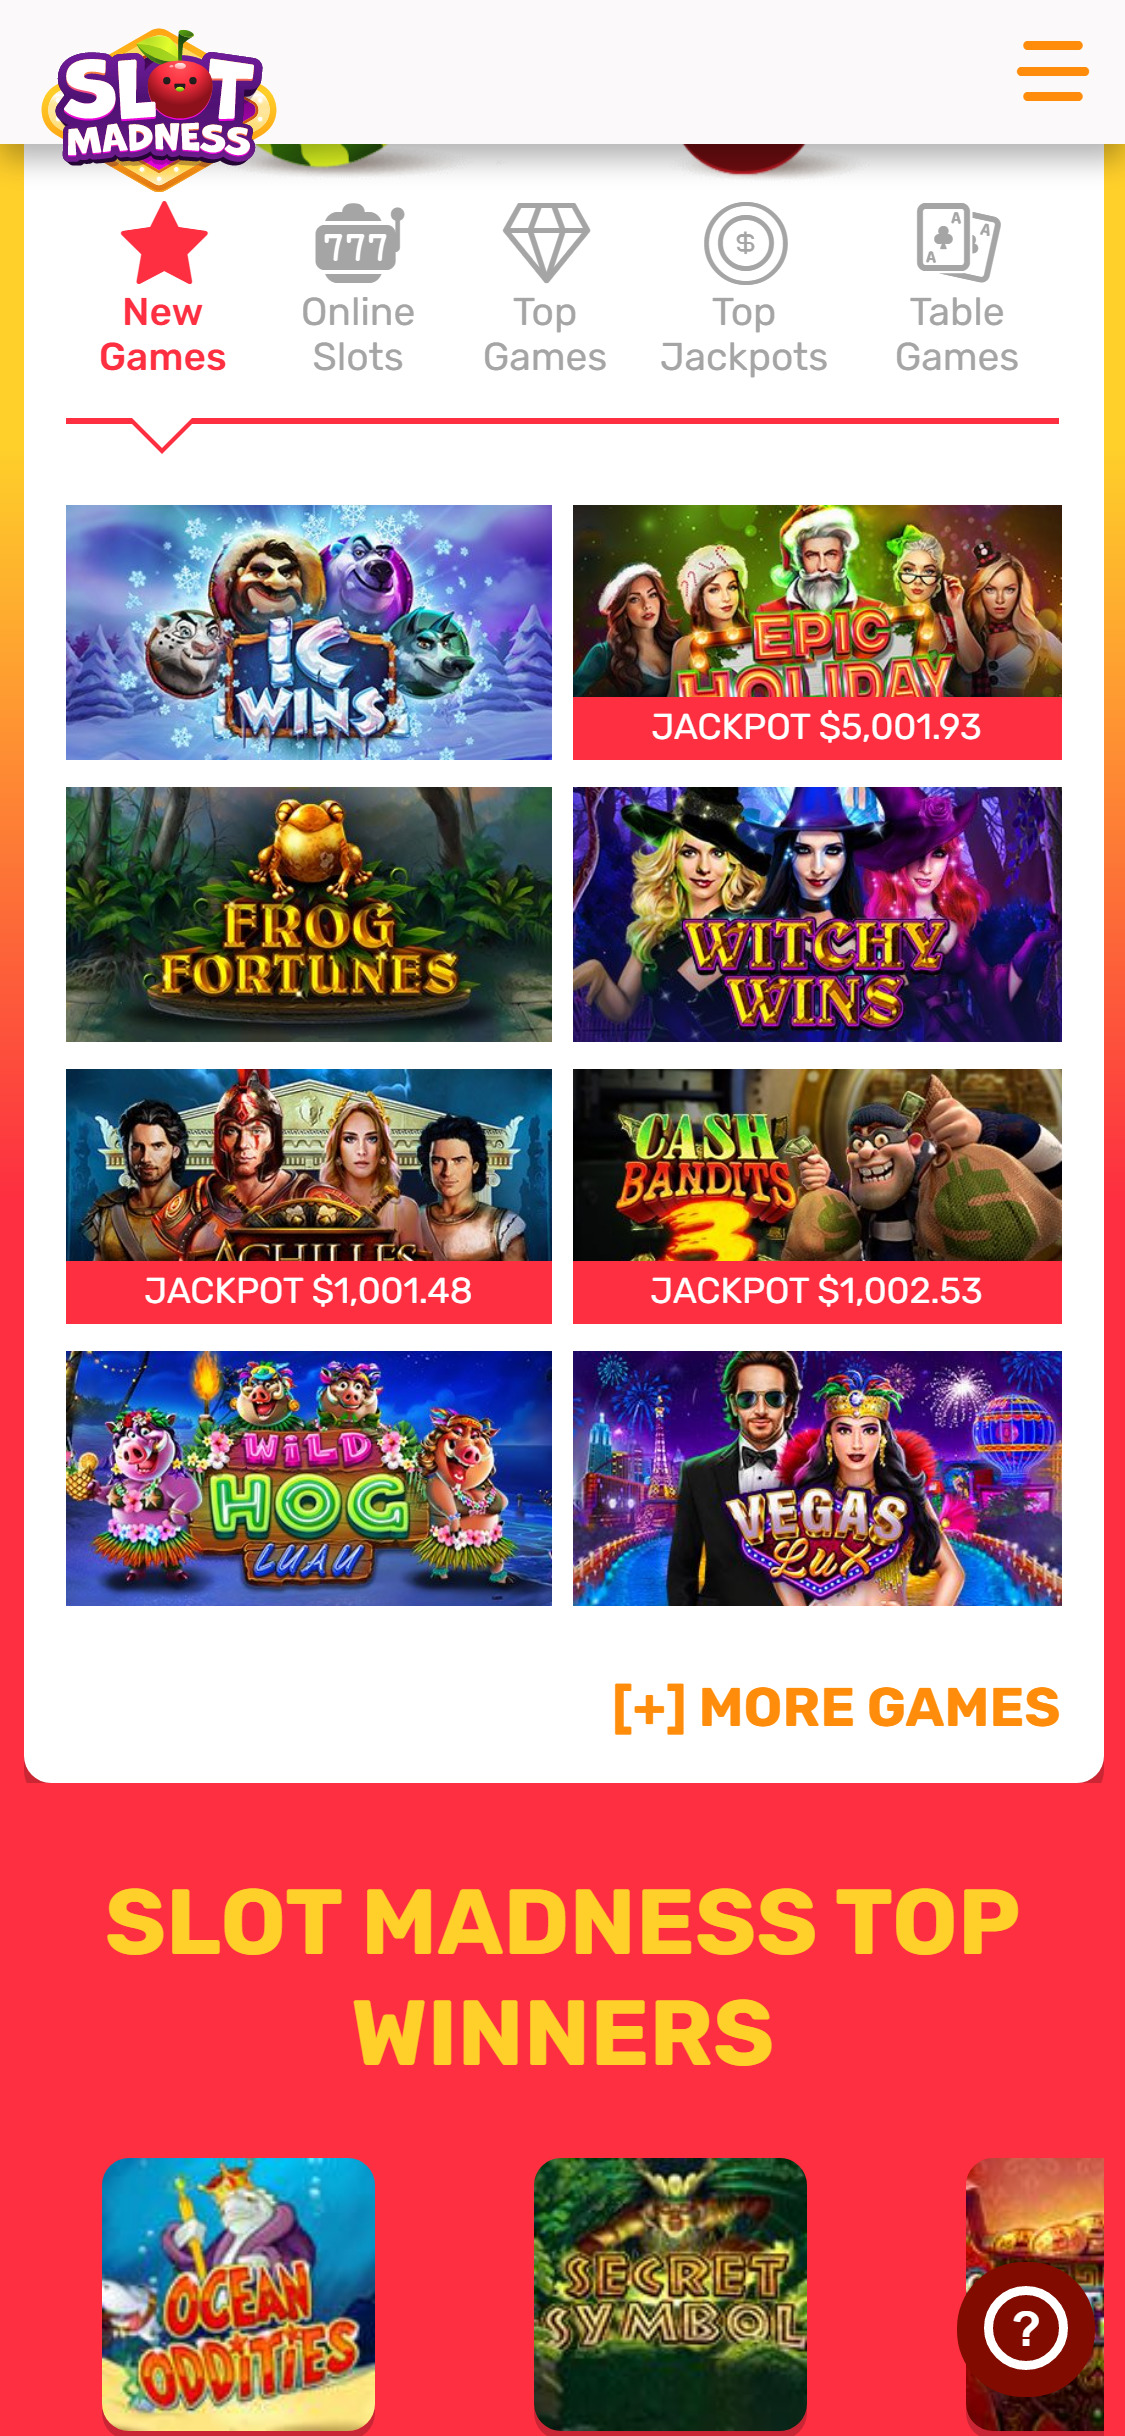 Slot Madness Casino Mobile Games Review